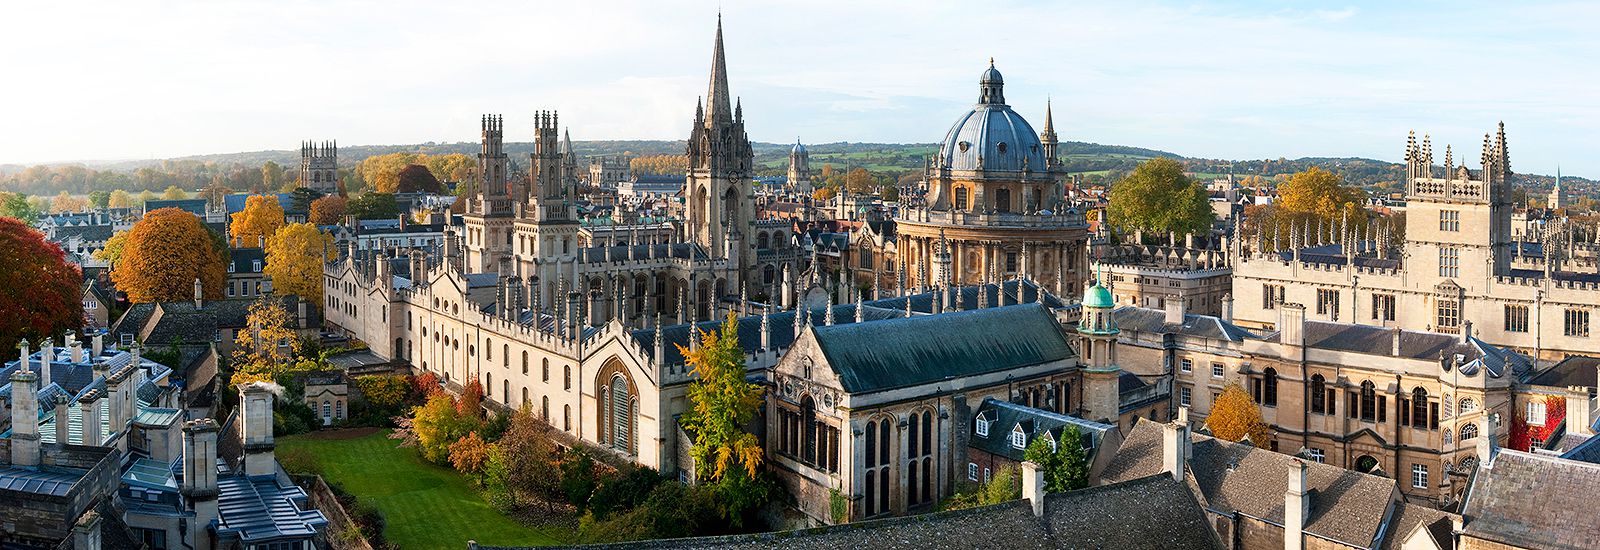 Oxford-.jpg